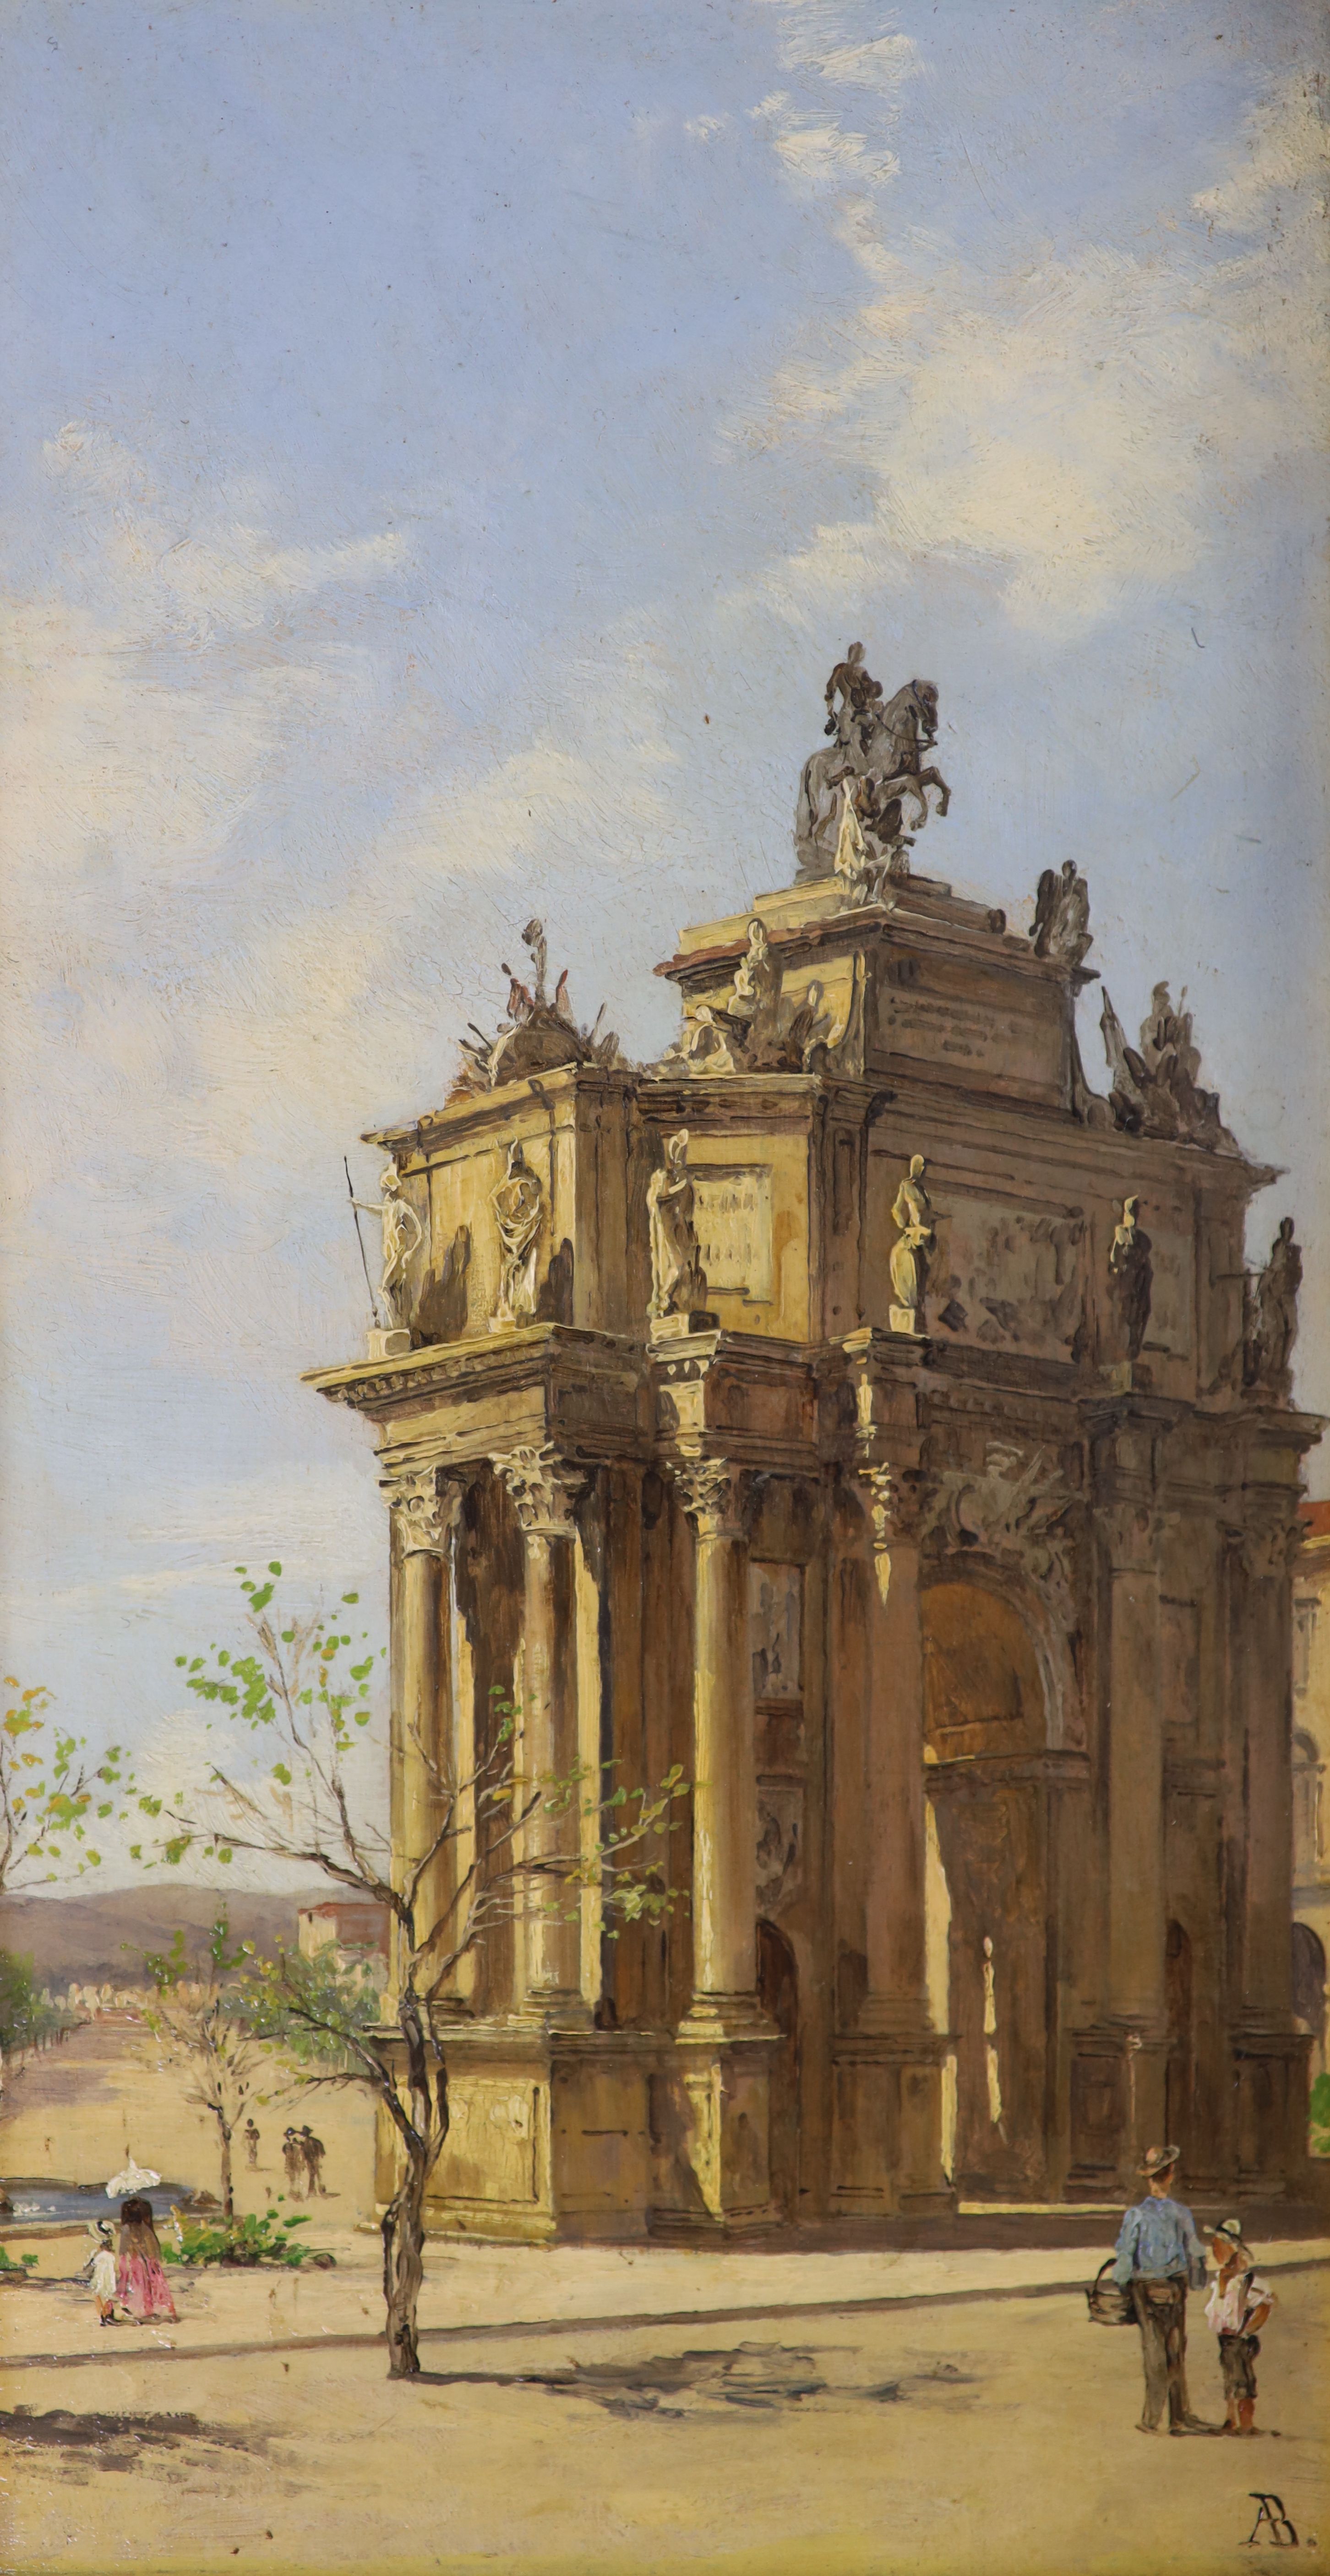 Antoinetta Brandeis (Italian, 1849-1926), Piazza San Domenico, Bologna & Triumphal Arch, pair of oils on board, 24 x 12.75cm